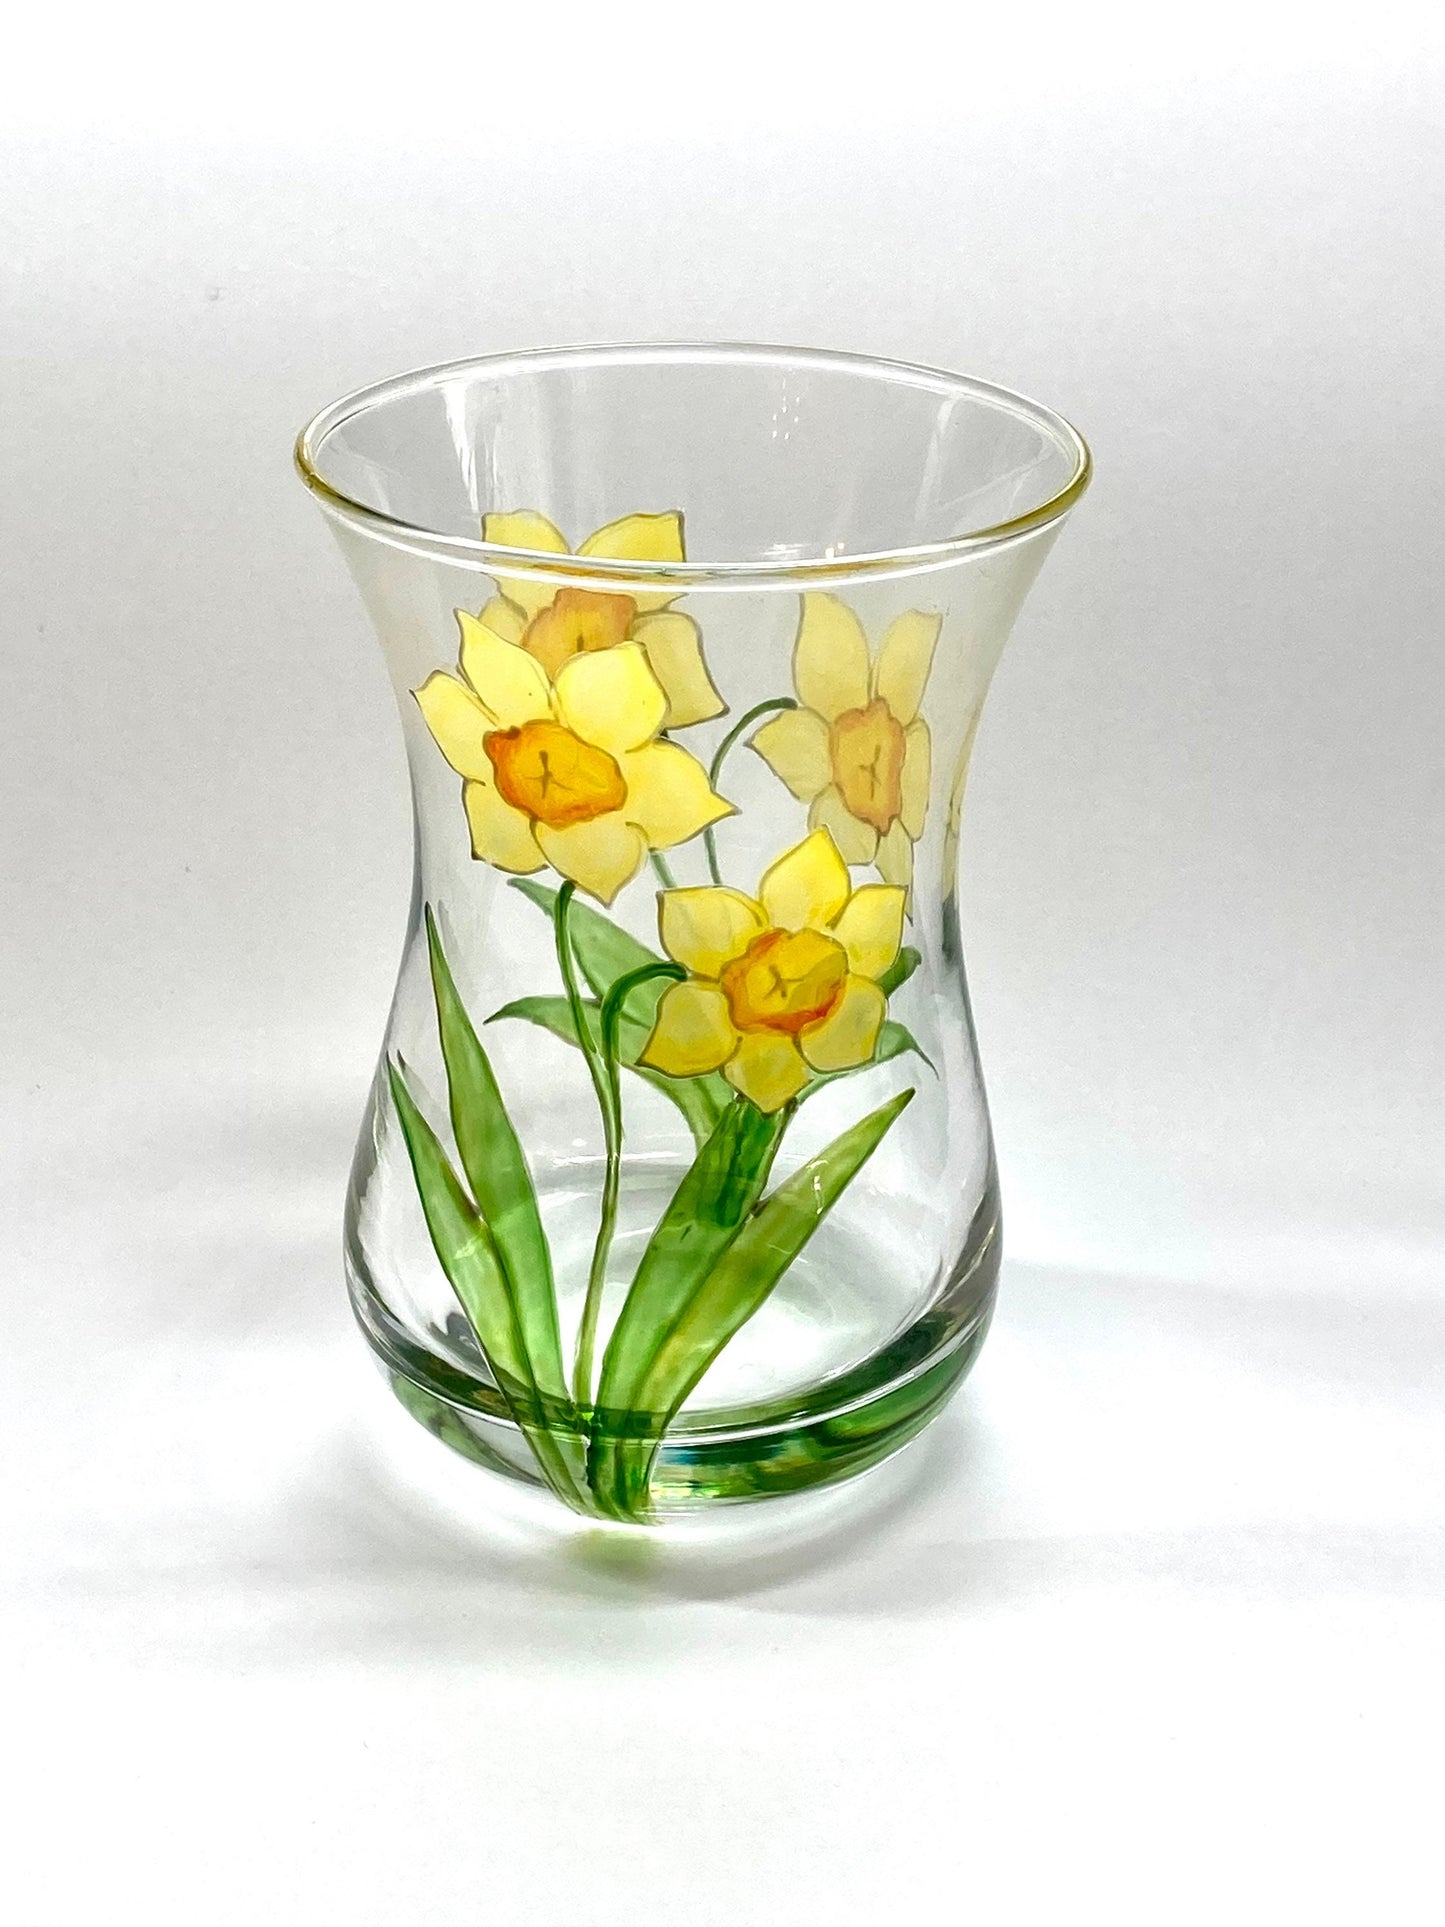 Daffodils Narcissi design mini posey vase